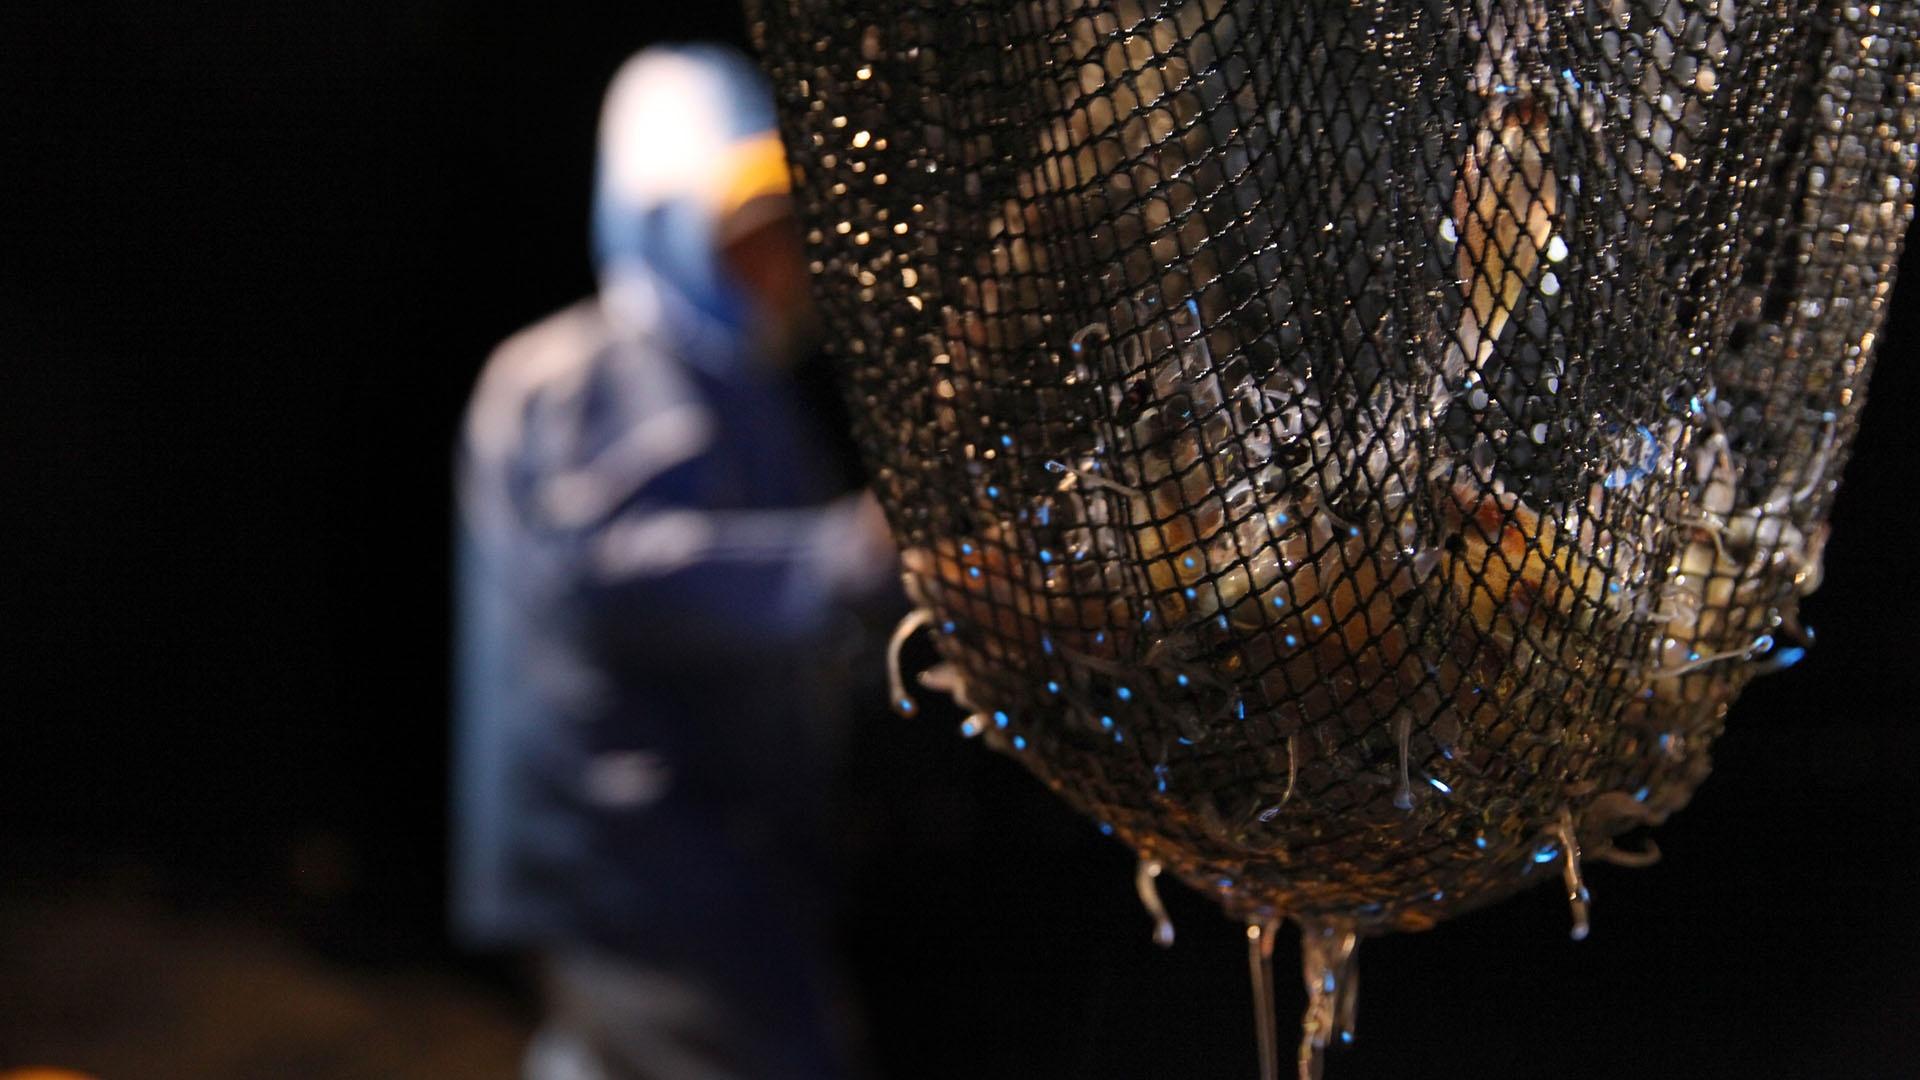 Elements: A net full of firefly squid, Watasenia scintillans, caught in Toyama Bay, Japan.